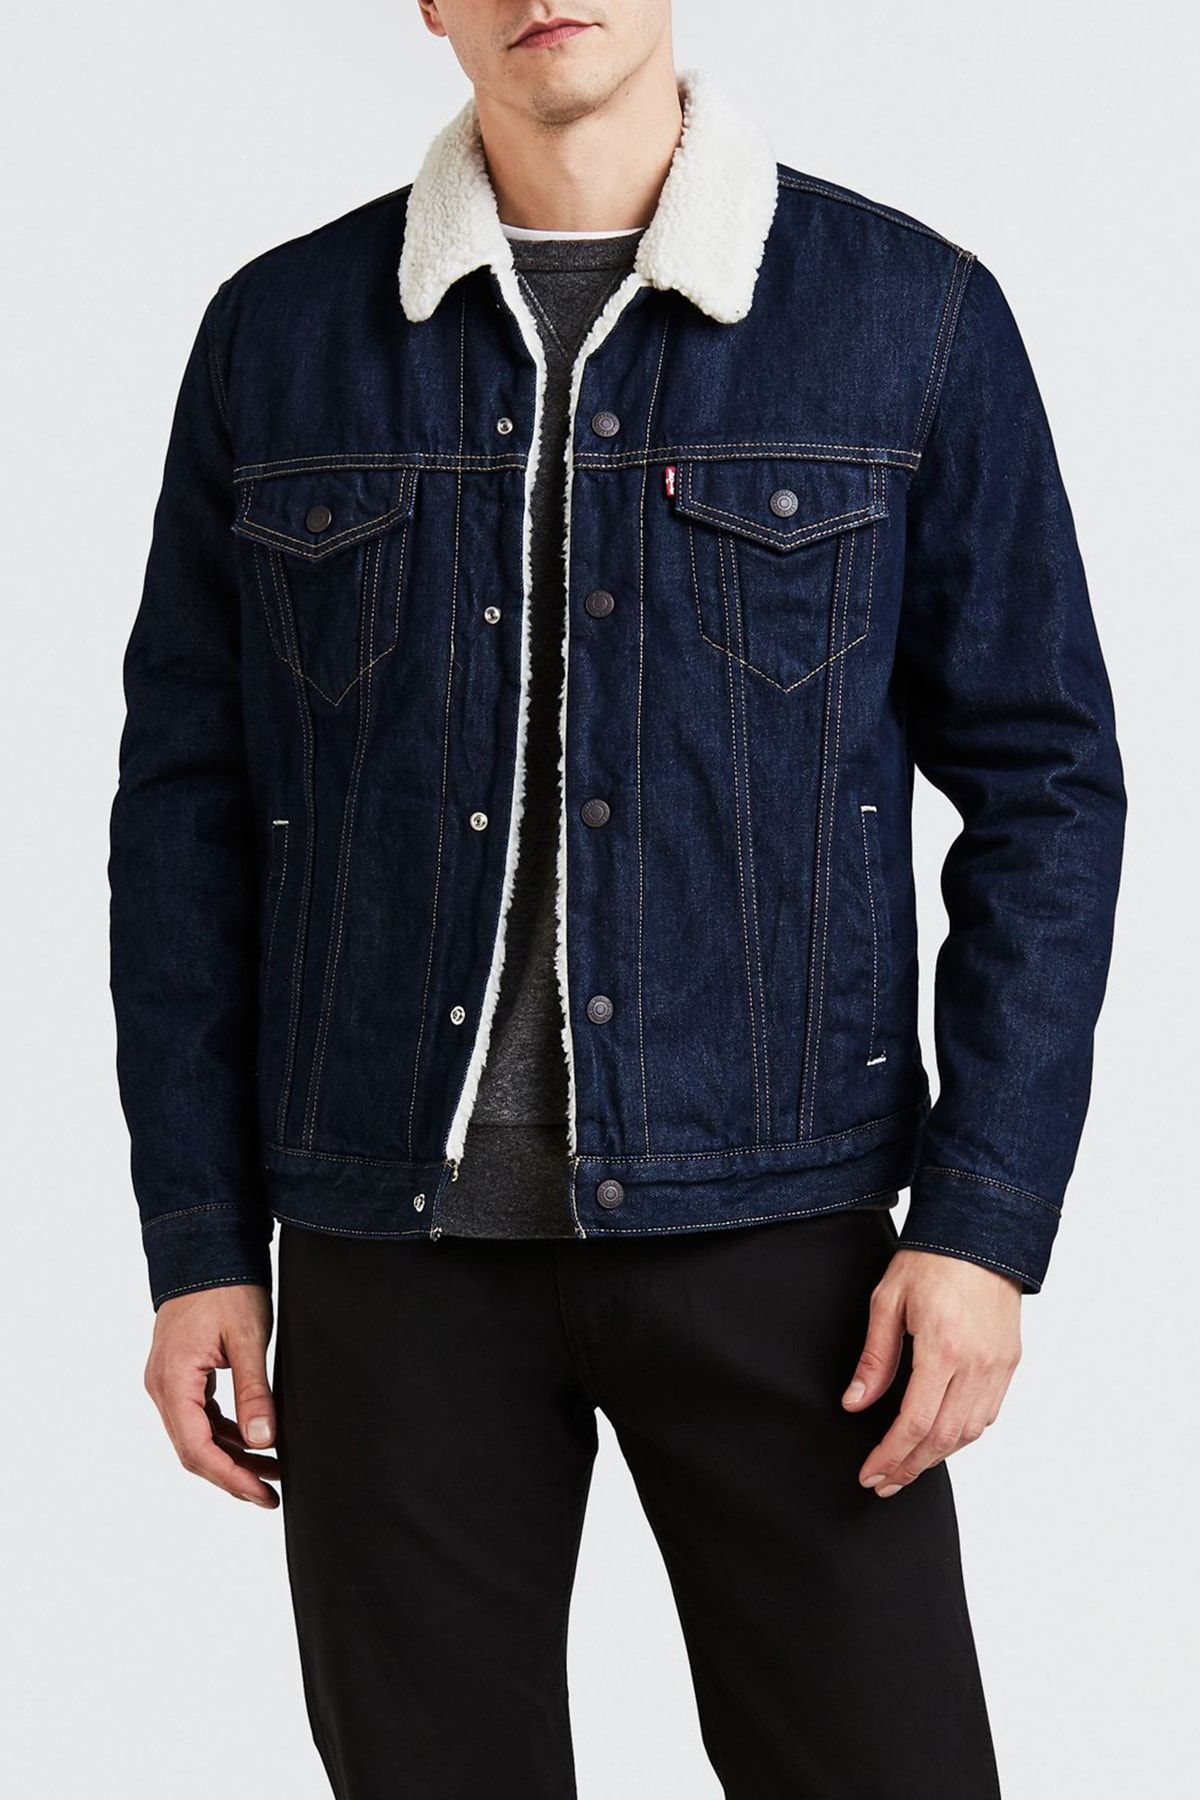 Levi's Jacket - Navy blue - Regular fit - Trendyol